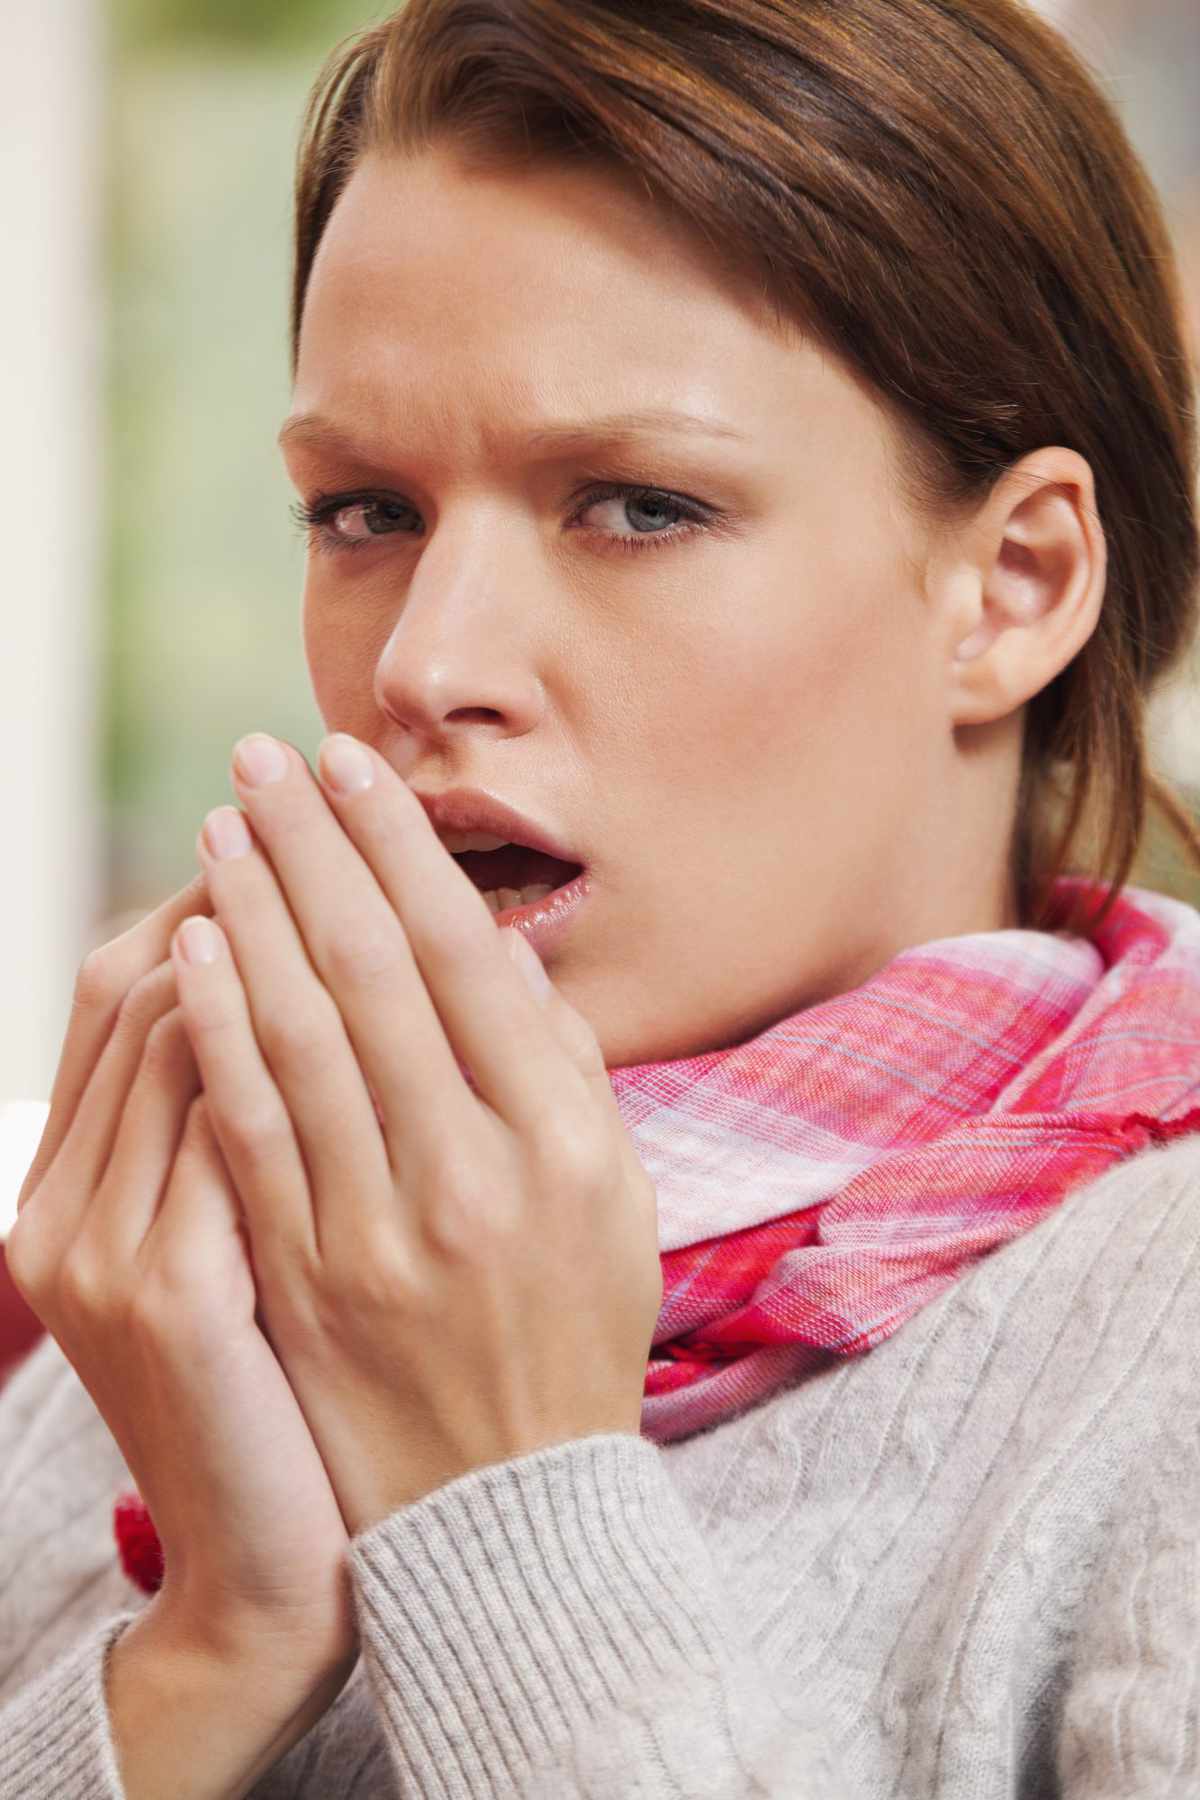 cough-lung-cancer-symptoms